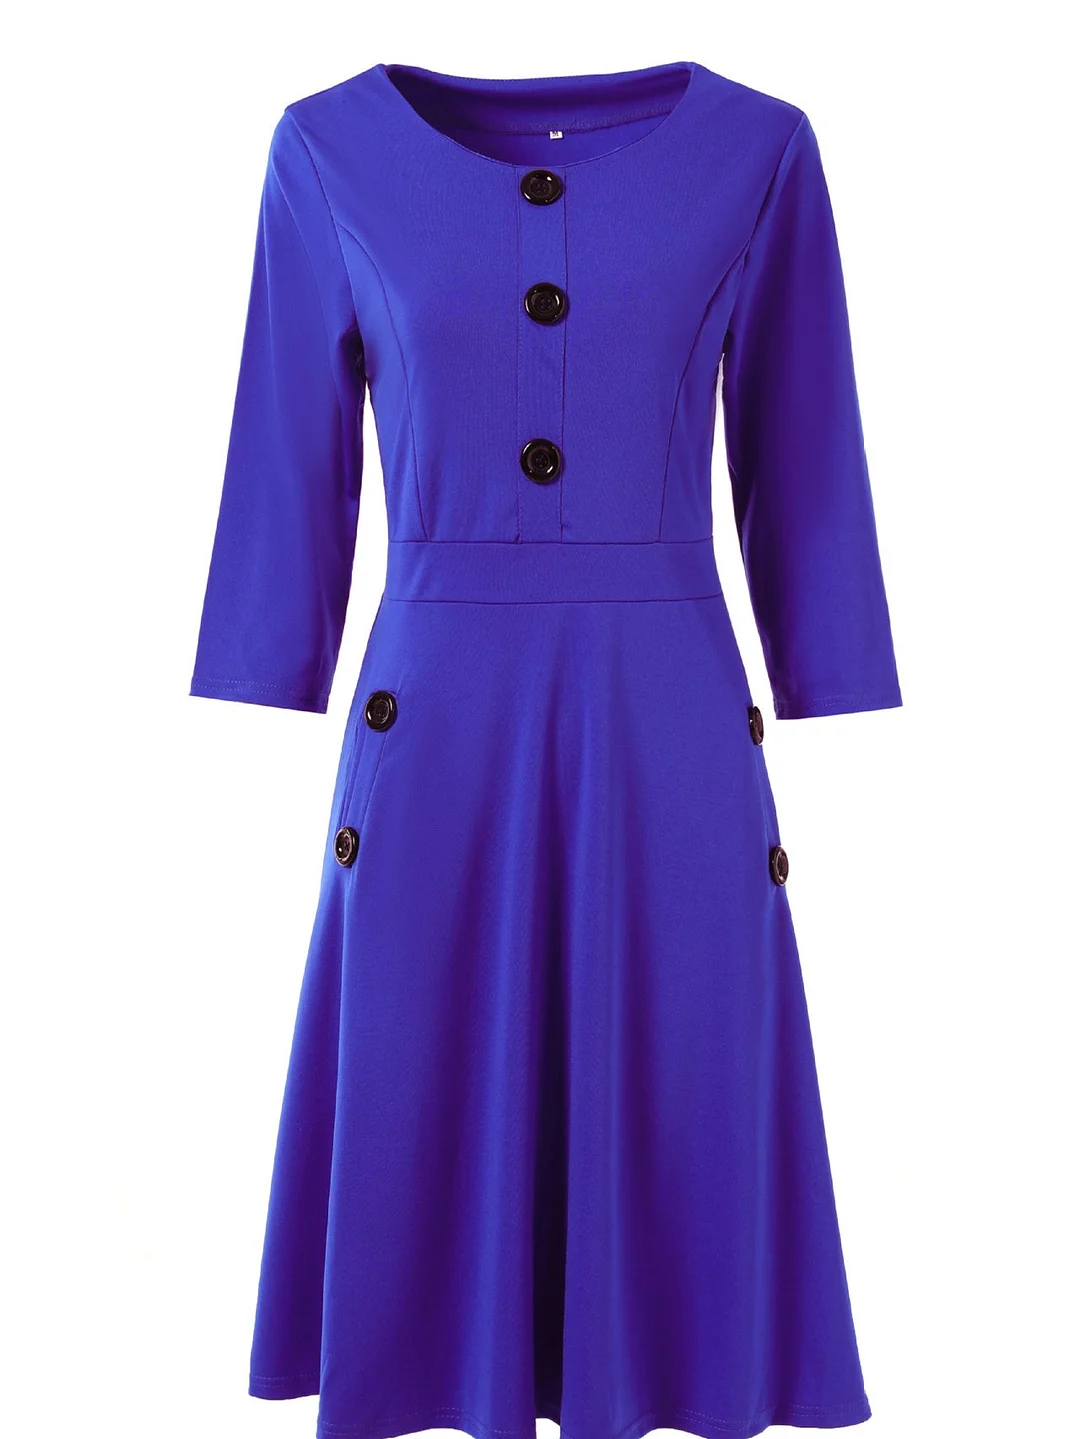 Women's 3/4 Sleeve Scoop Neck Solid Color Midi Dress